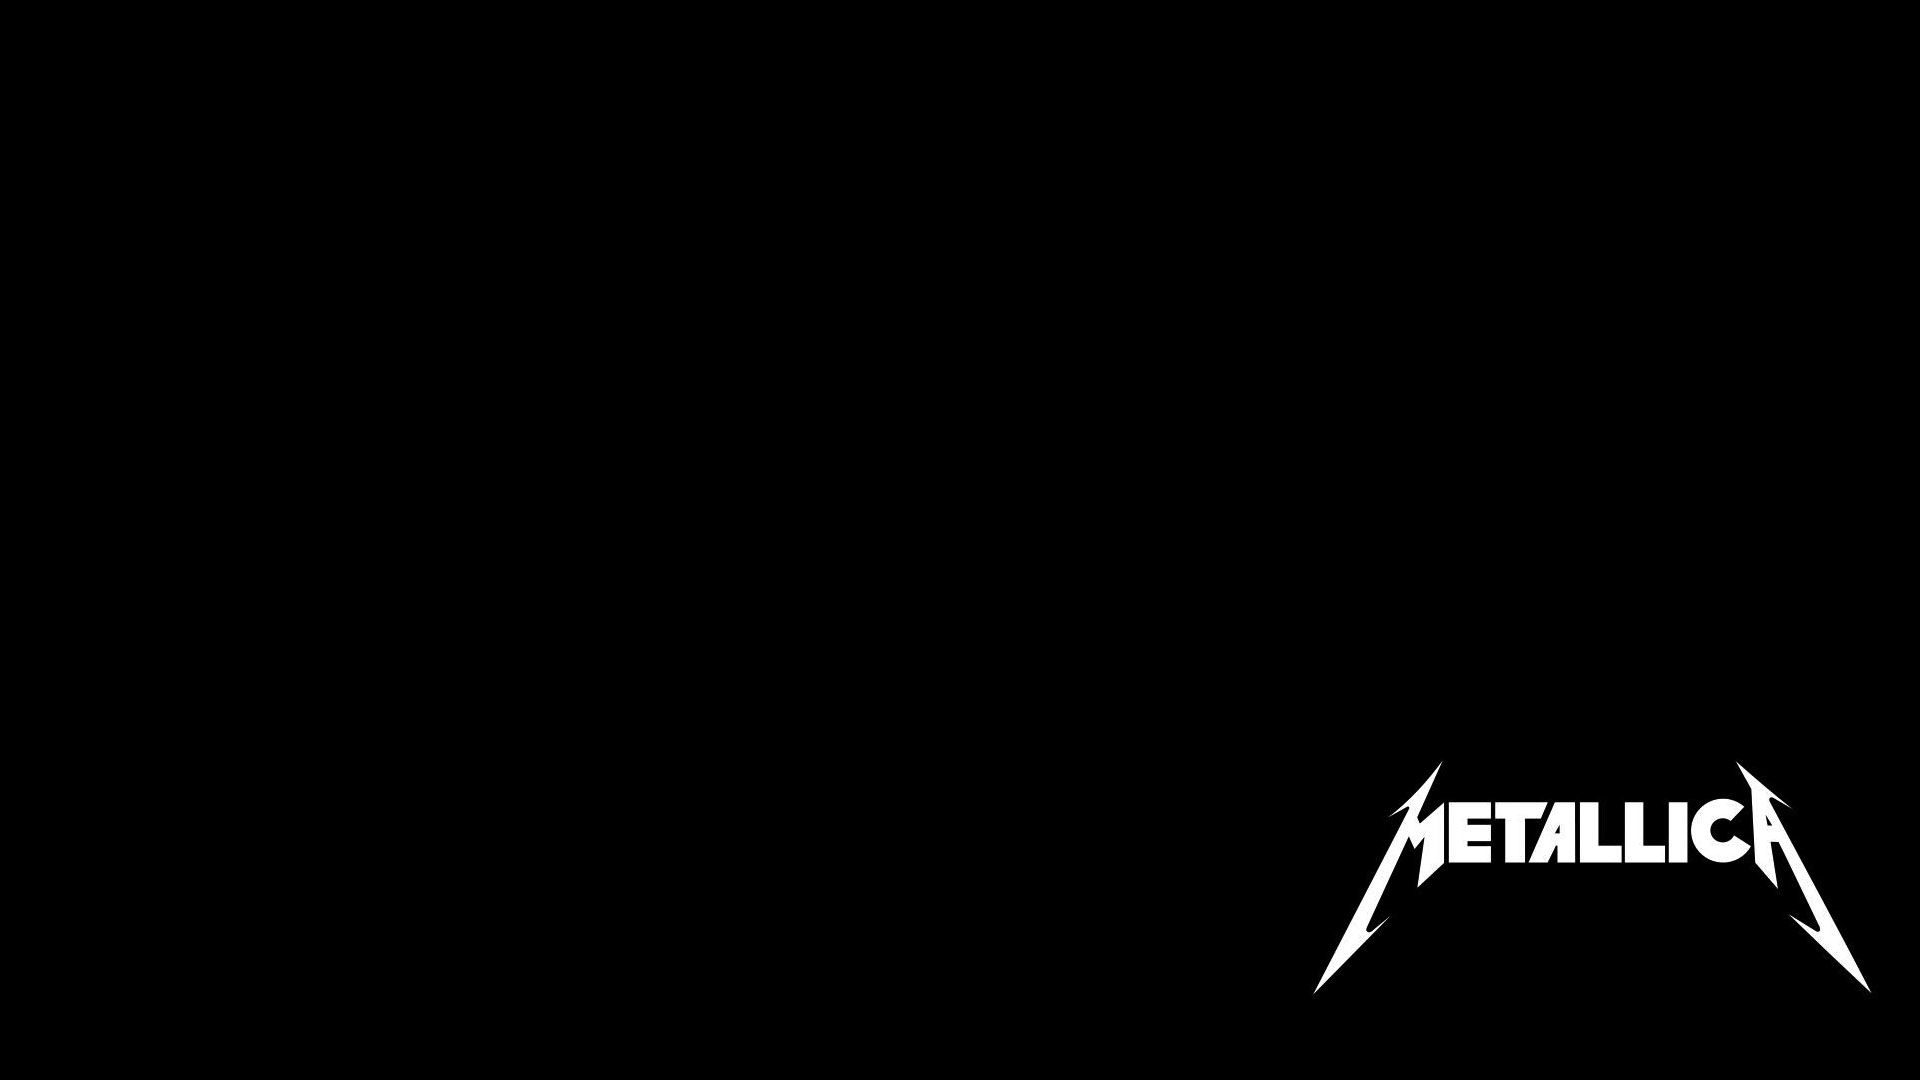 Metallica HD Background - Pitch Black by rohynrajesh on DeviantArt